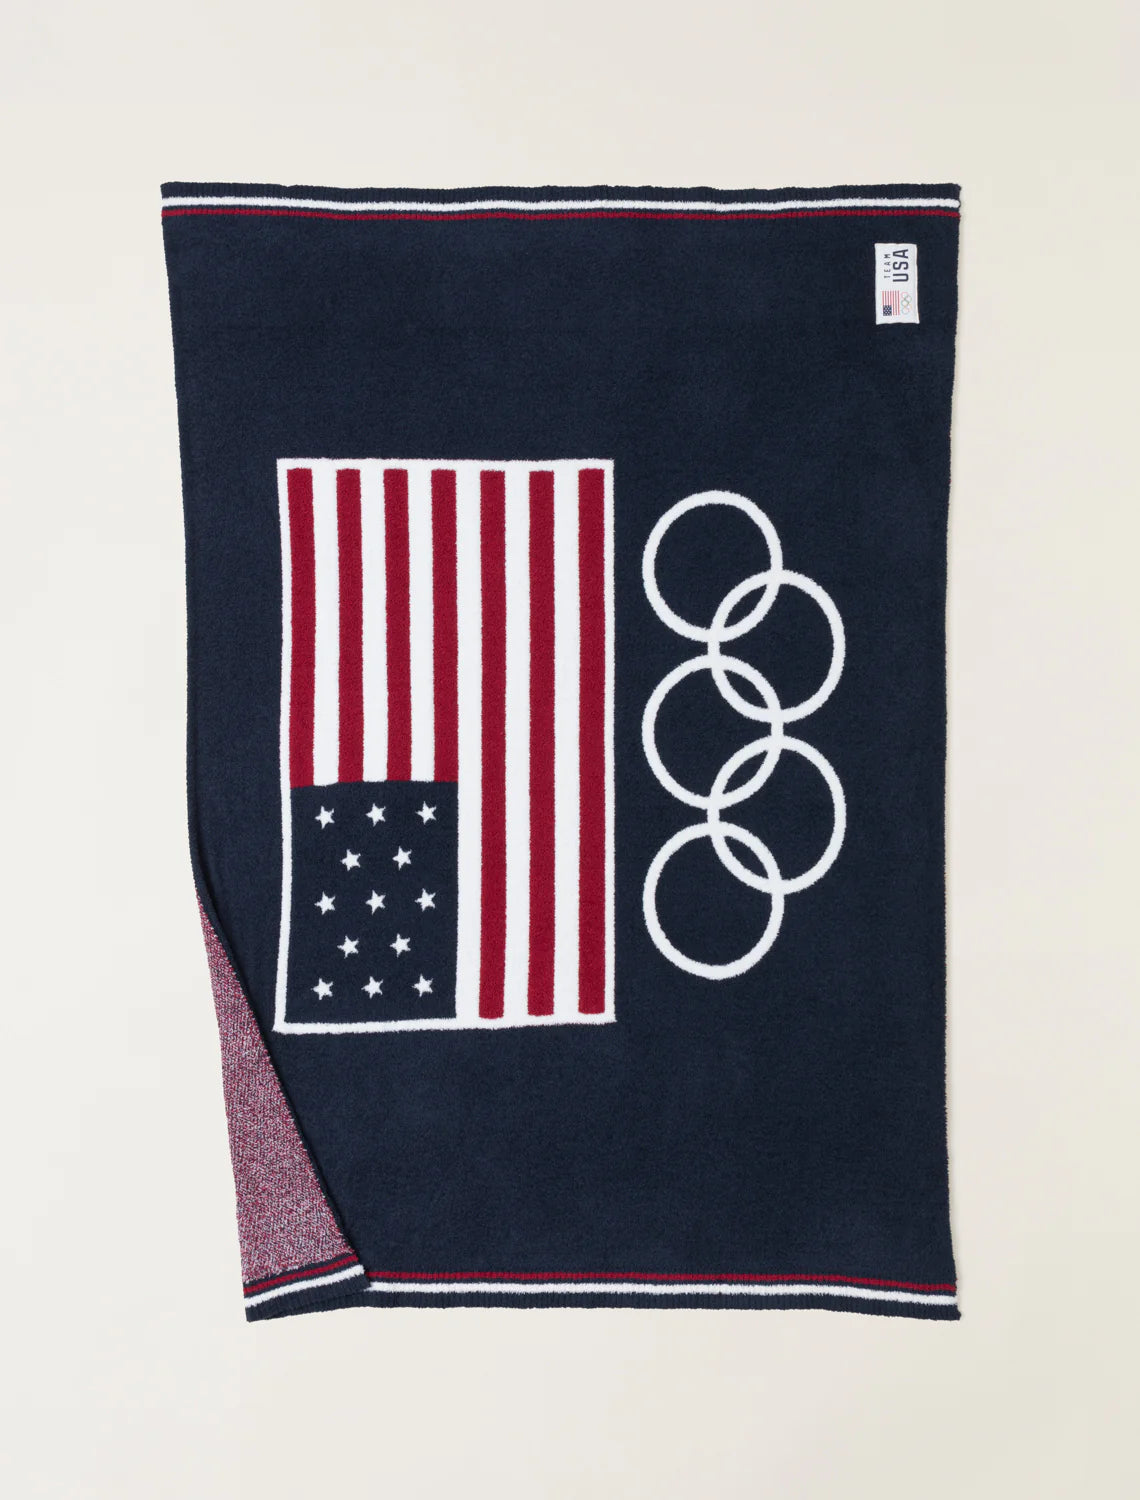 TEAM USA FLAG OLYMPIC RING THROW